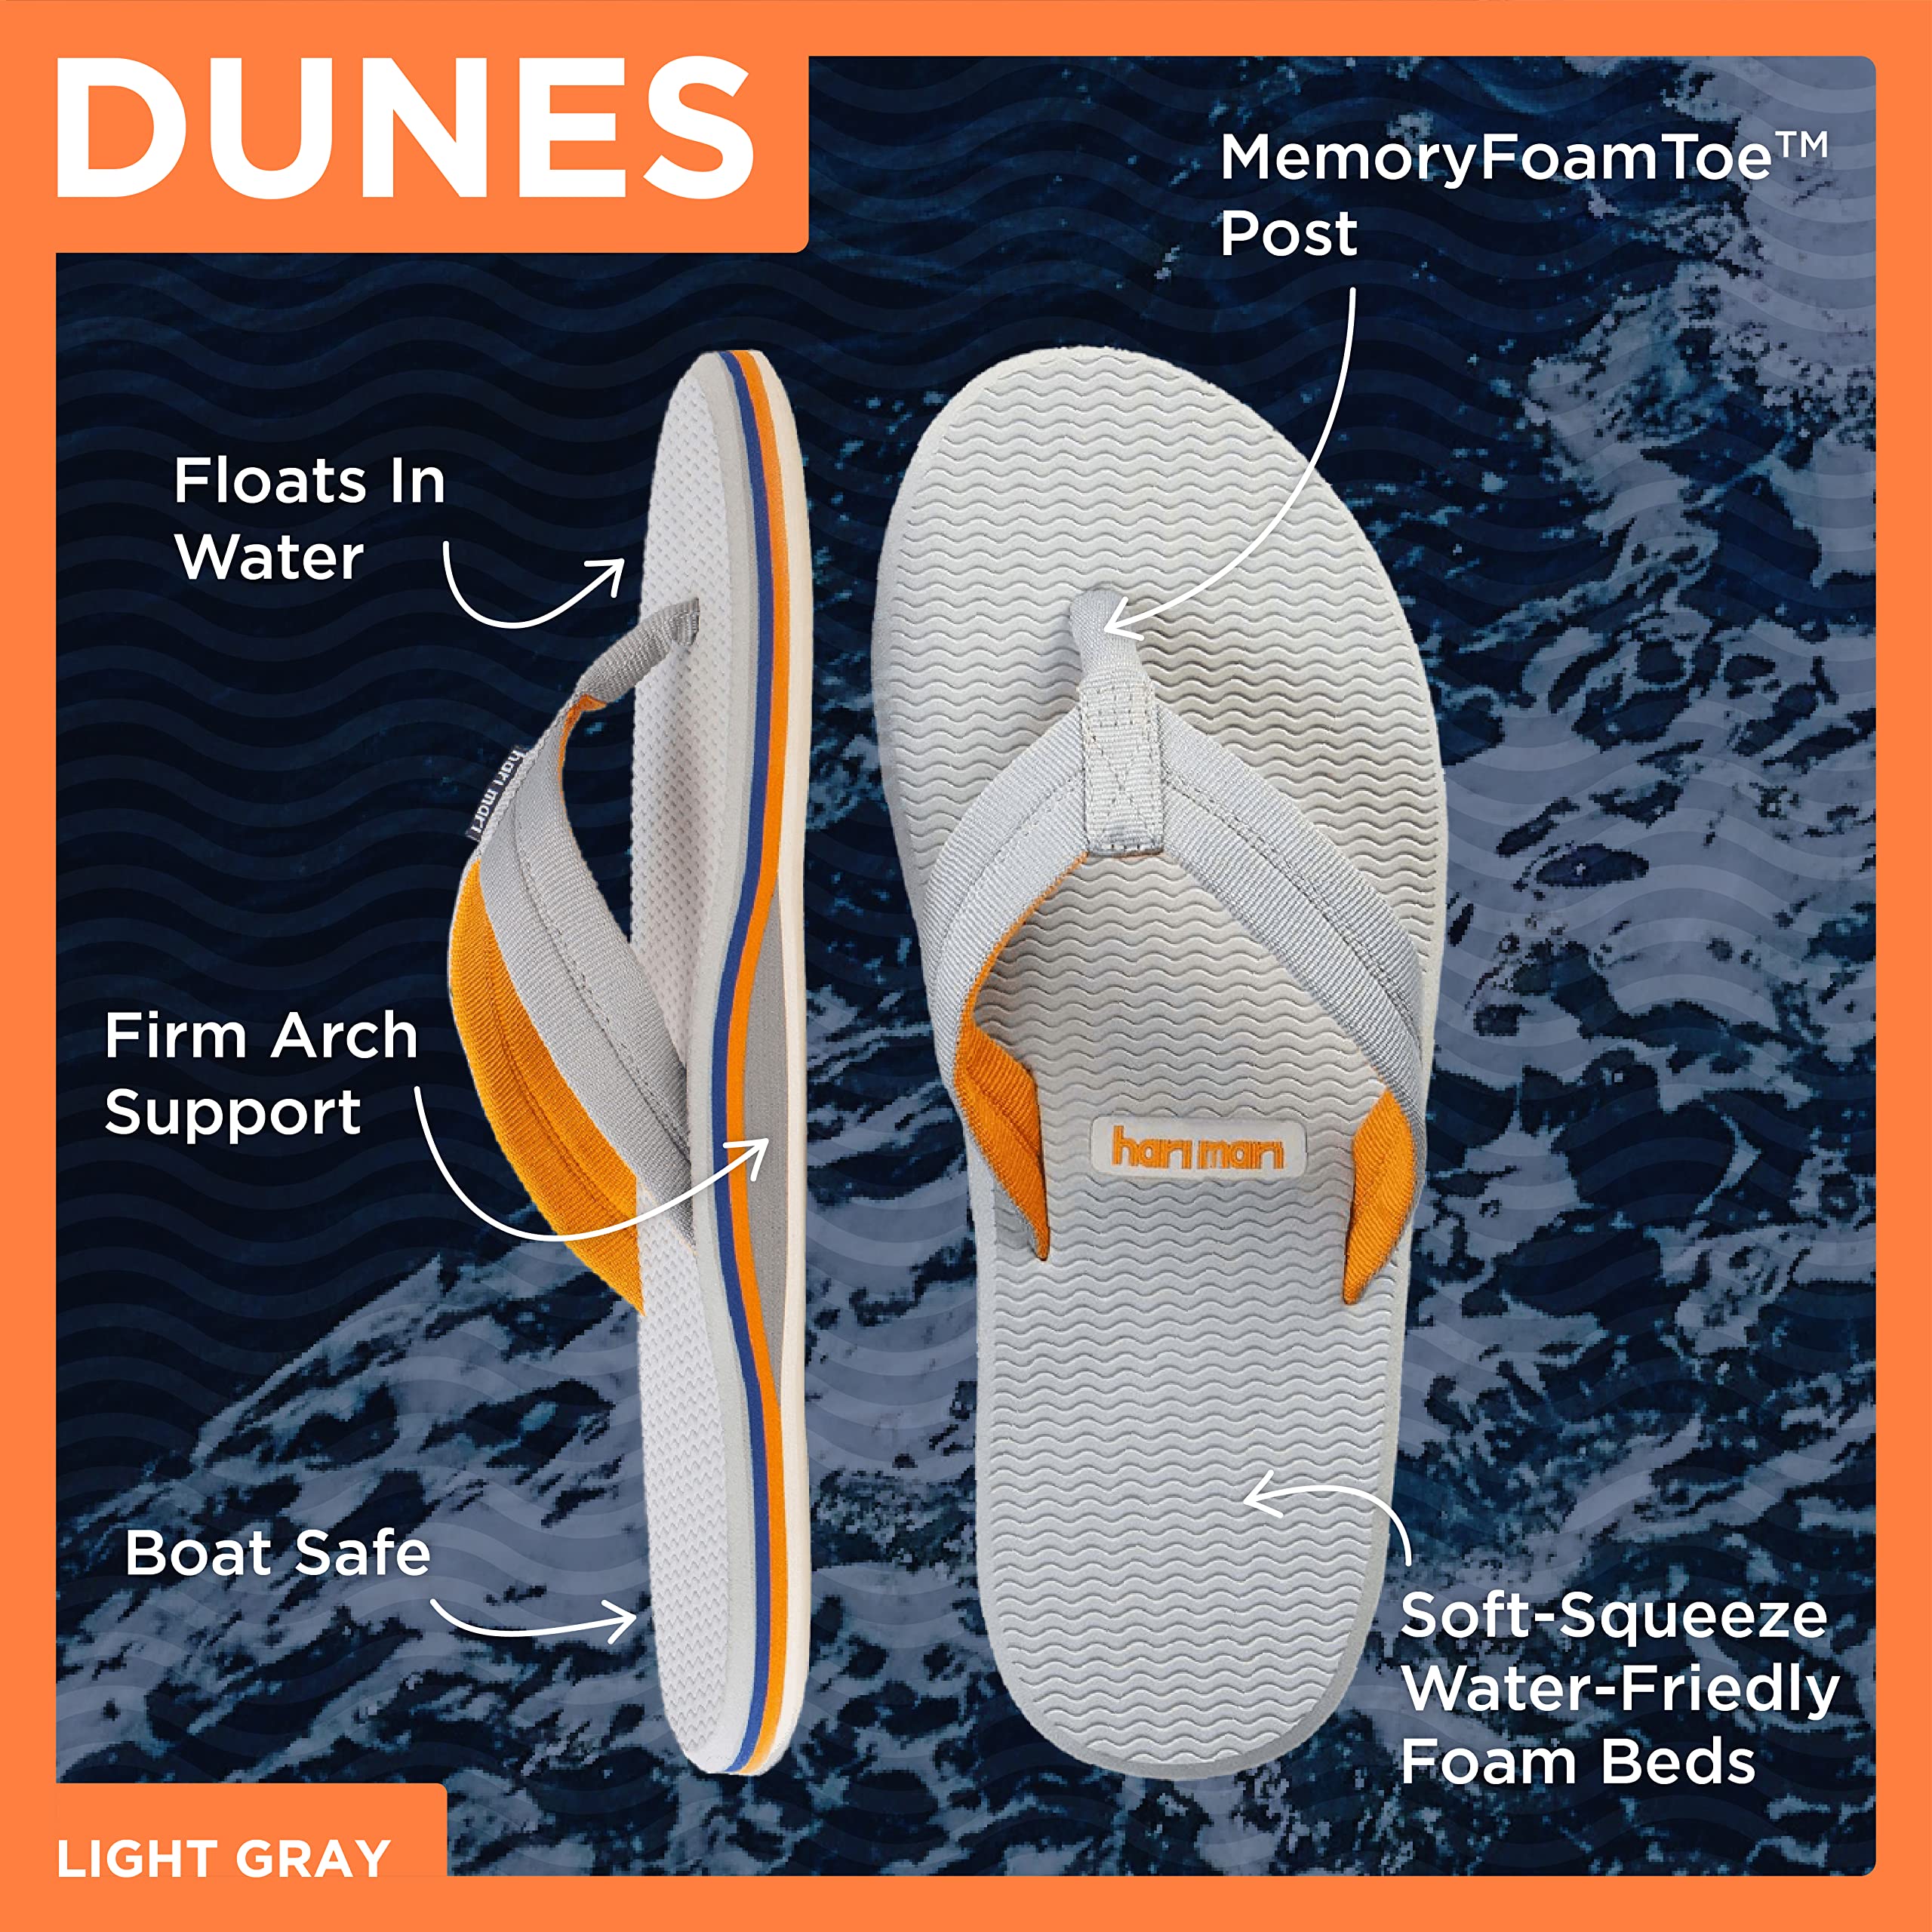 Hari Mari Dunes - Men's Premium Waterproof Flip Flops - Rubber Sandals with Comfortable Memory Foam Straps - Water Ready Summer Shoes for Men